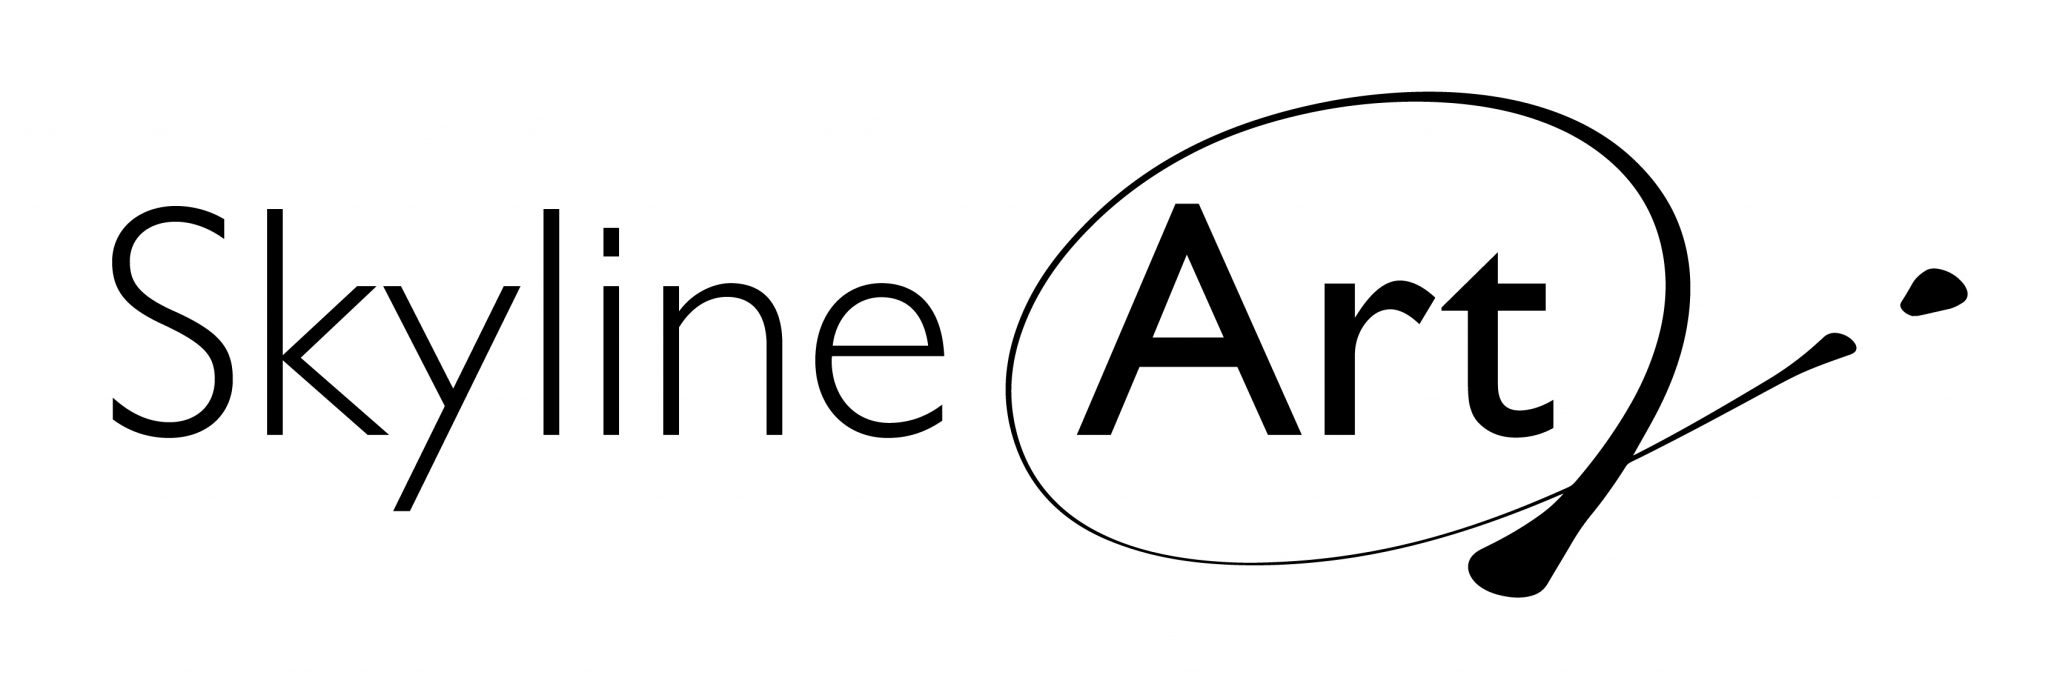 Skyline Art logo with paintbrush design element